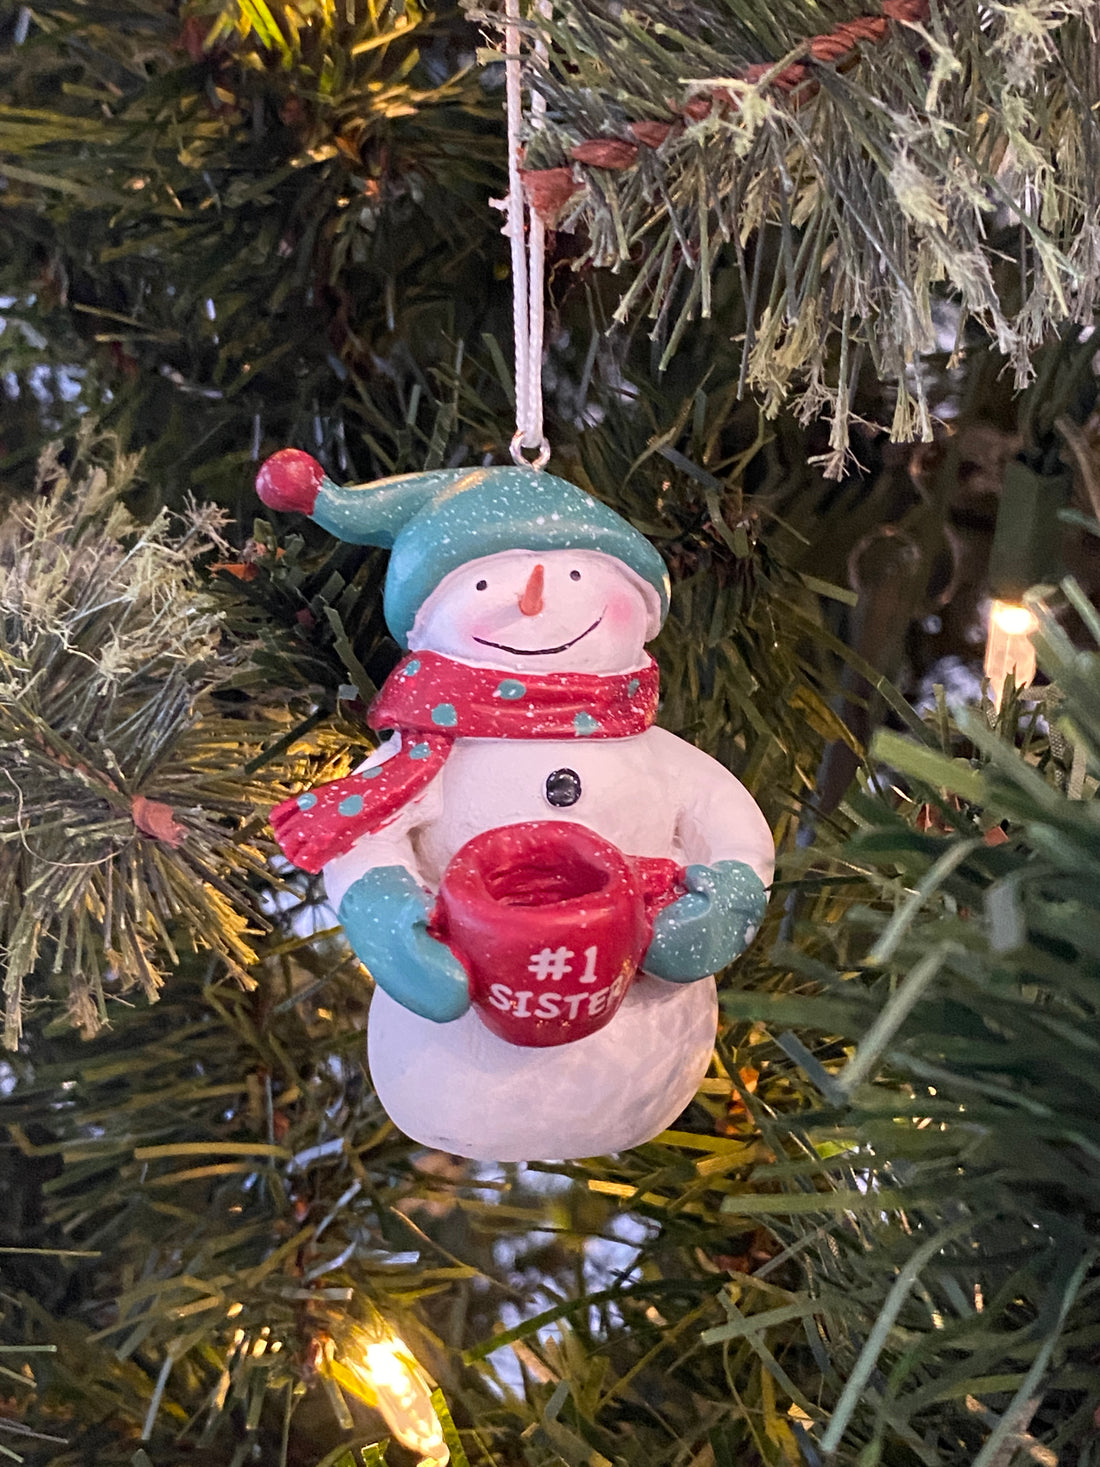 #1 Sister Snowman Ornament